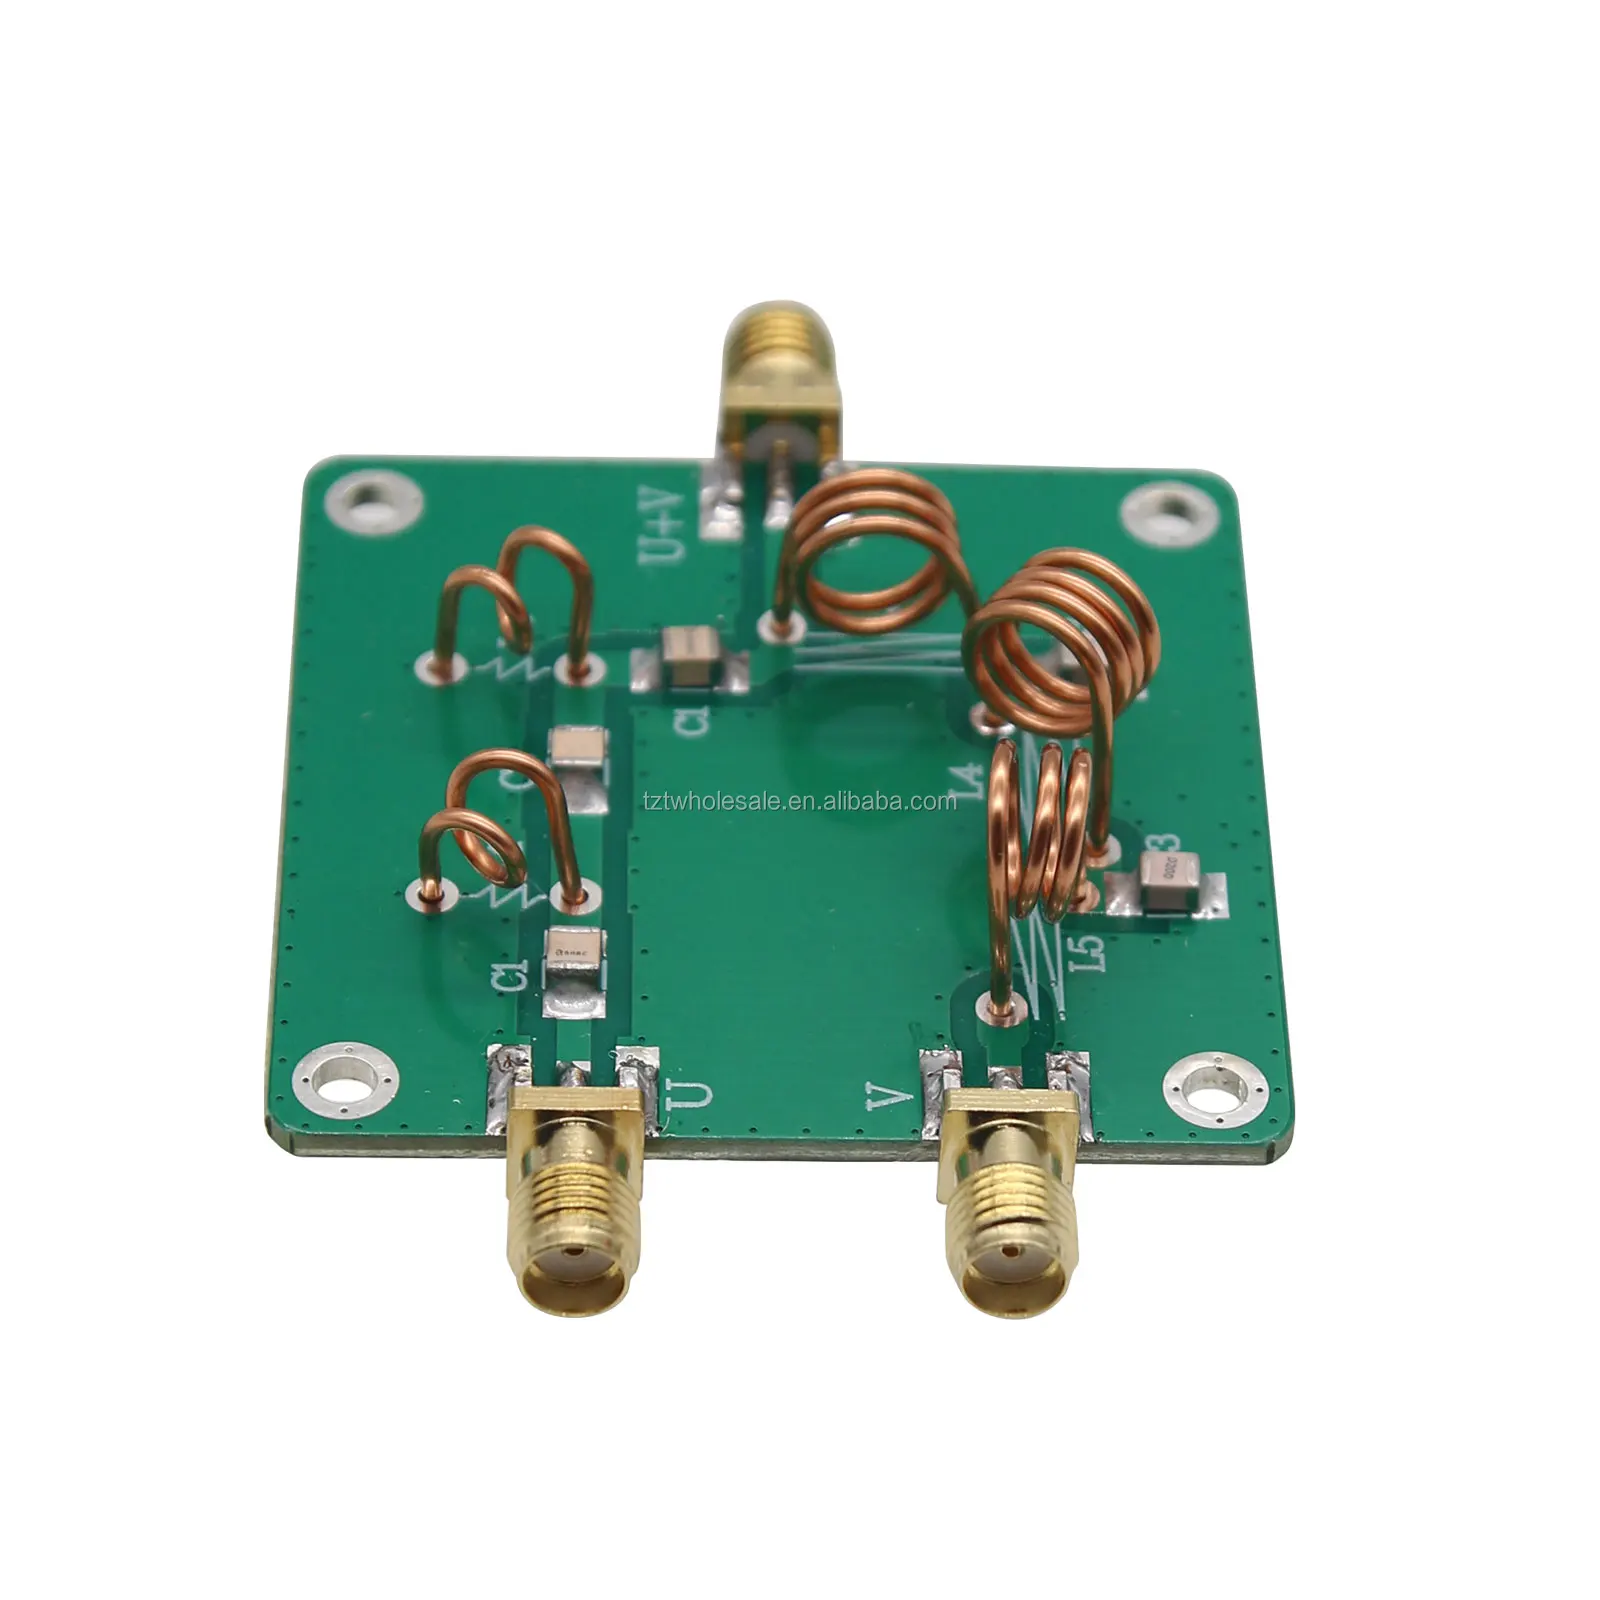 UV Combiner UV Splitter LC Filter Antenna Combiner Module DC-185MHz 350-560MHz 